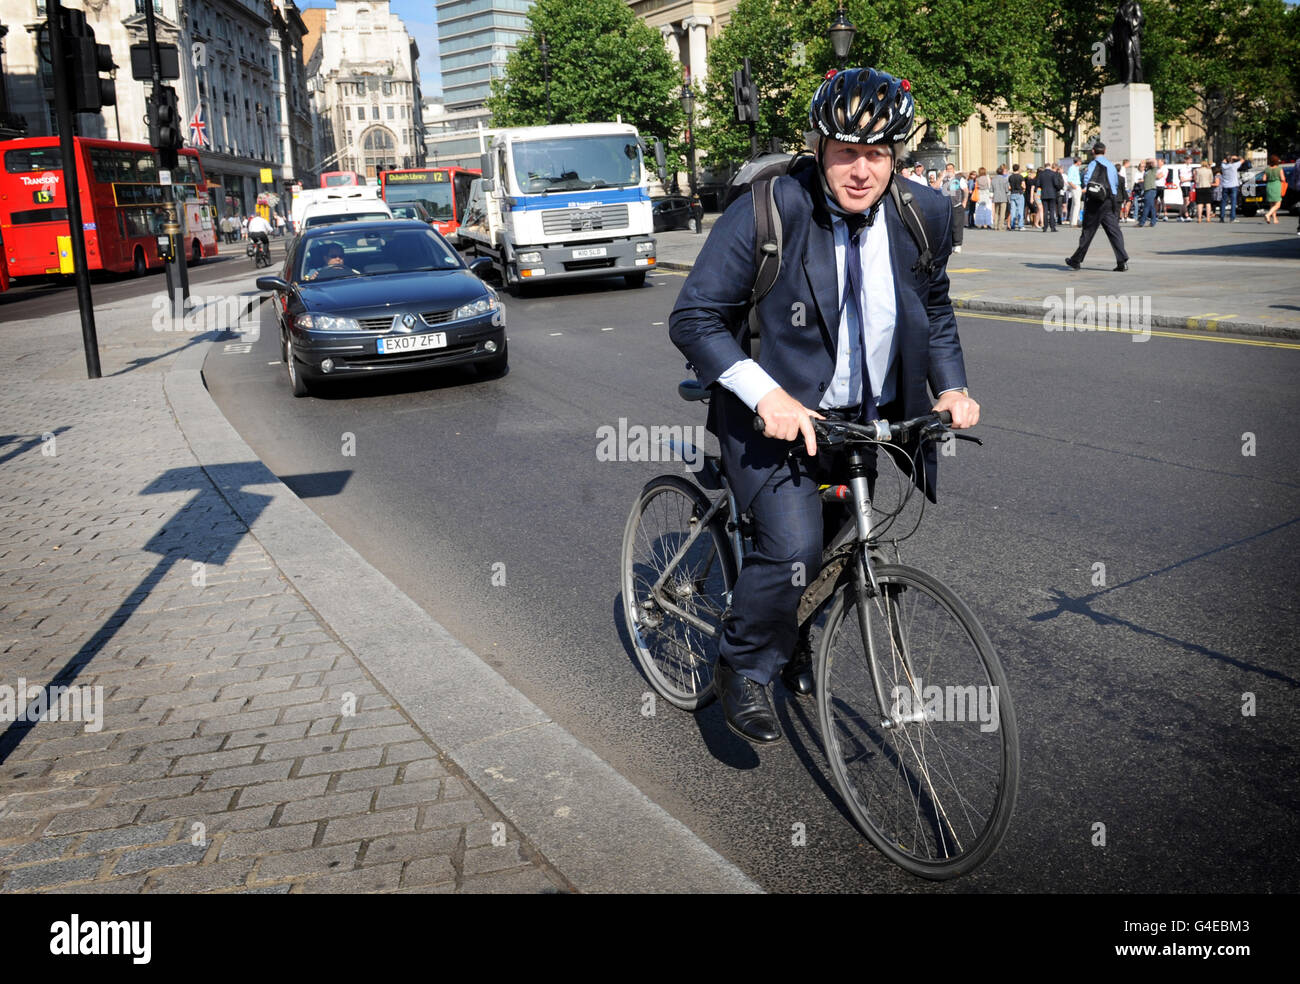 Boris Radfahren in London. Der Londoner Bürgermeister Boris Johnson radelt heute am Trafalgar Square in London vorbei. Stockfoto